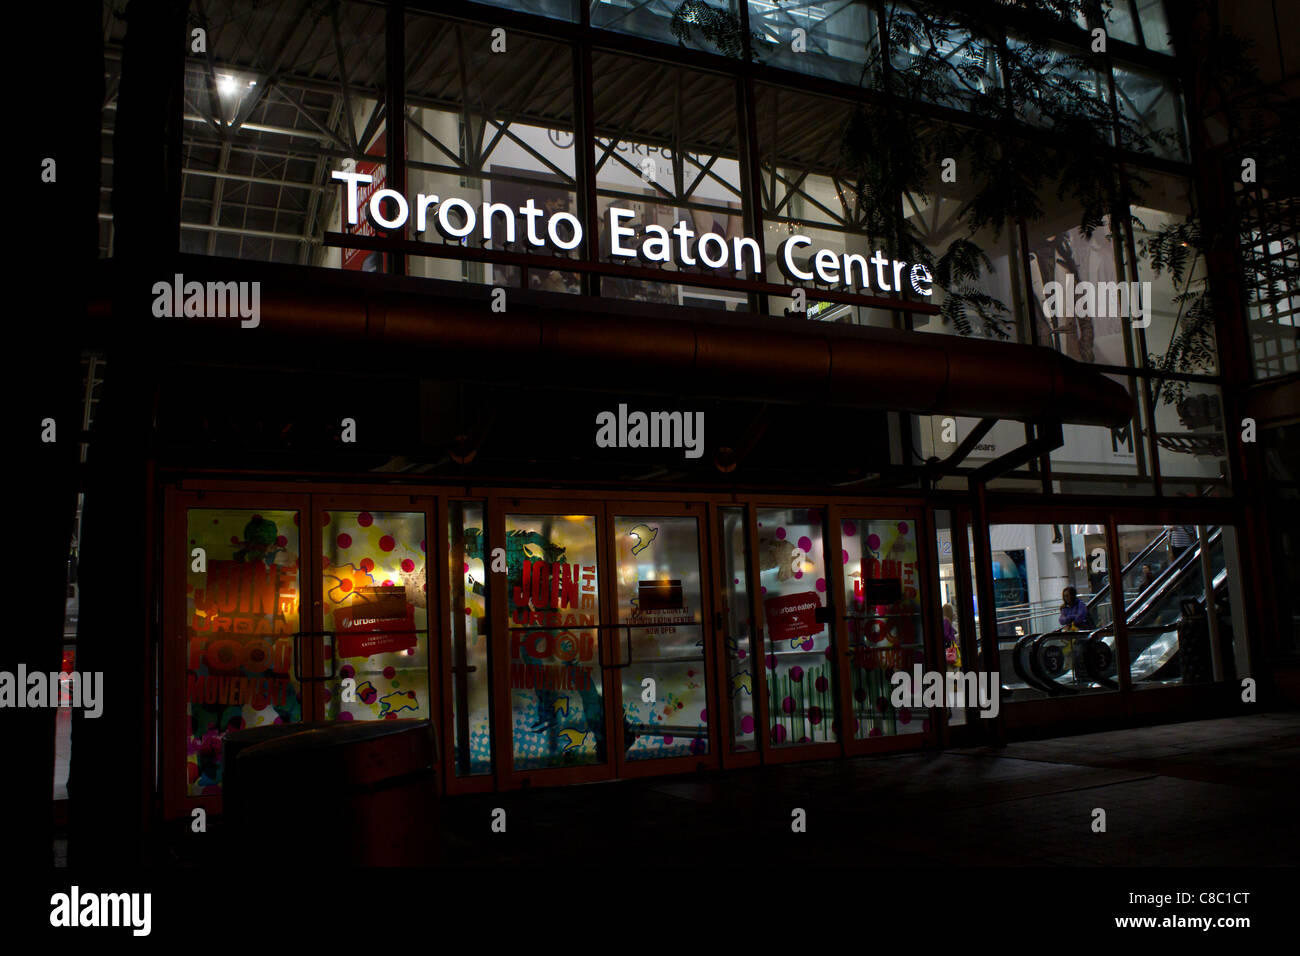 toronto eaton center sign night shopping mall Stock Photo